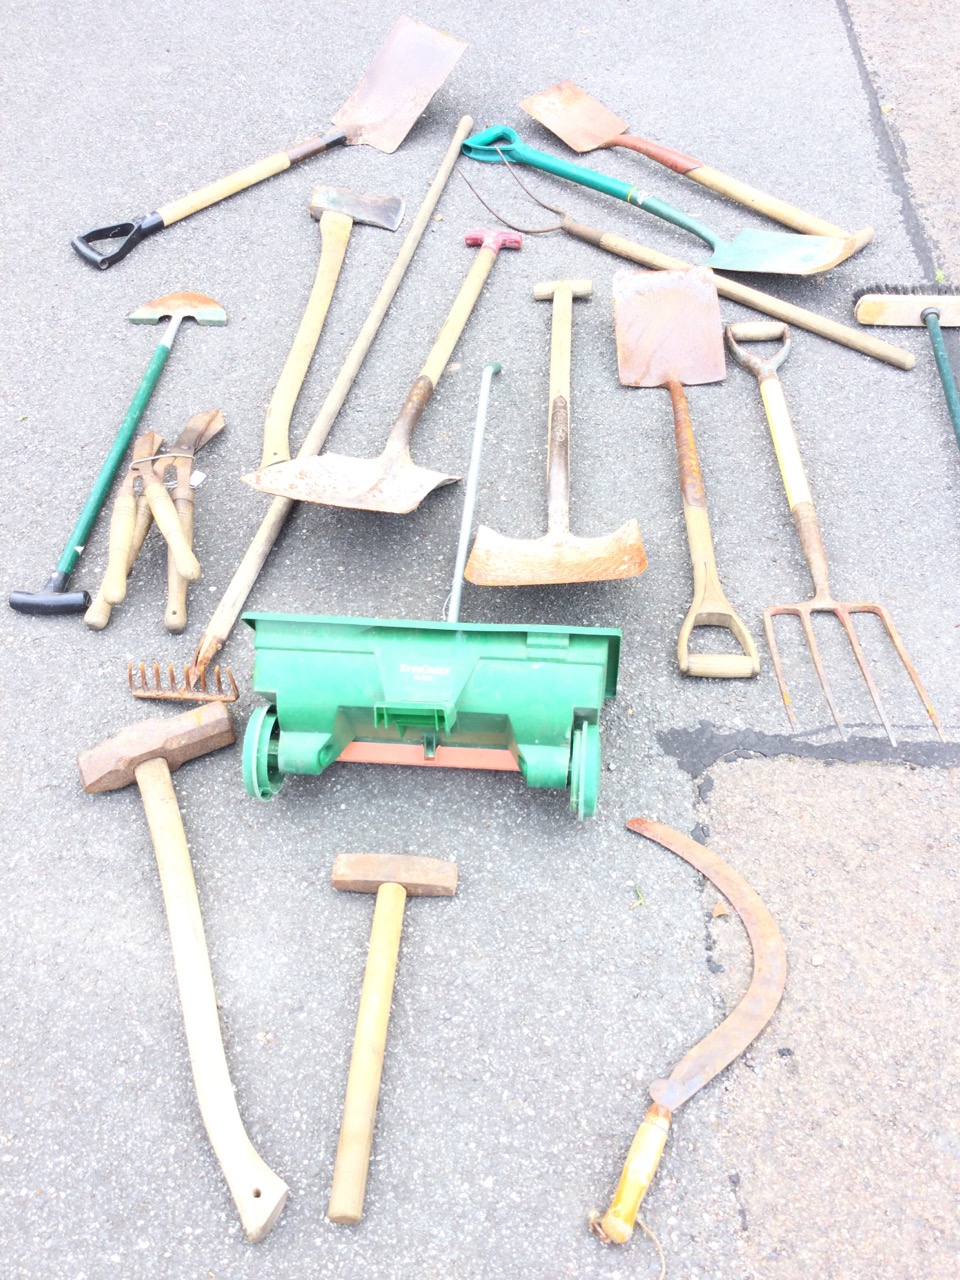 Miscellaneous garden tools including shovels, rakes, shears, axes, spades, scythes, forks, a lawn